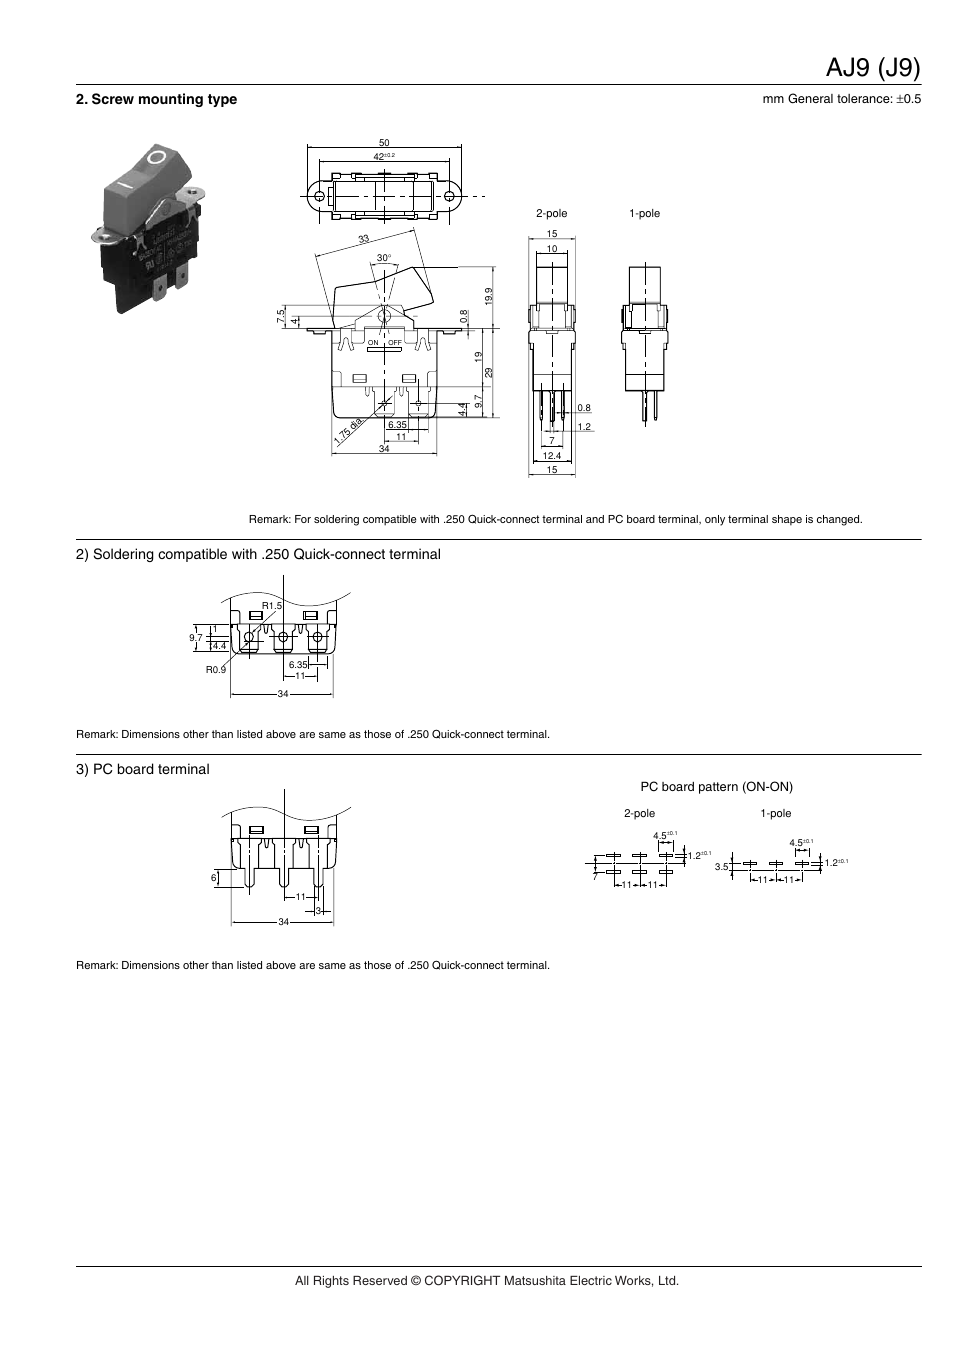 Aj9 (j9), Screw mounting type, 3) pc board terminal | Panasonic AJ9 (J9) User Manual | Page 5 / 6